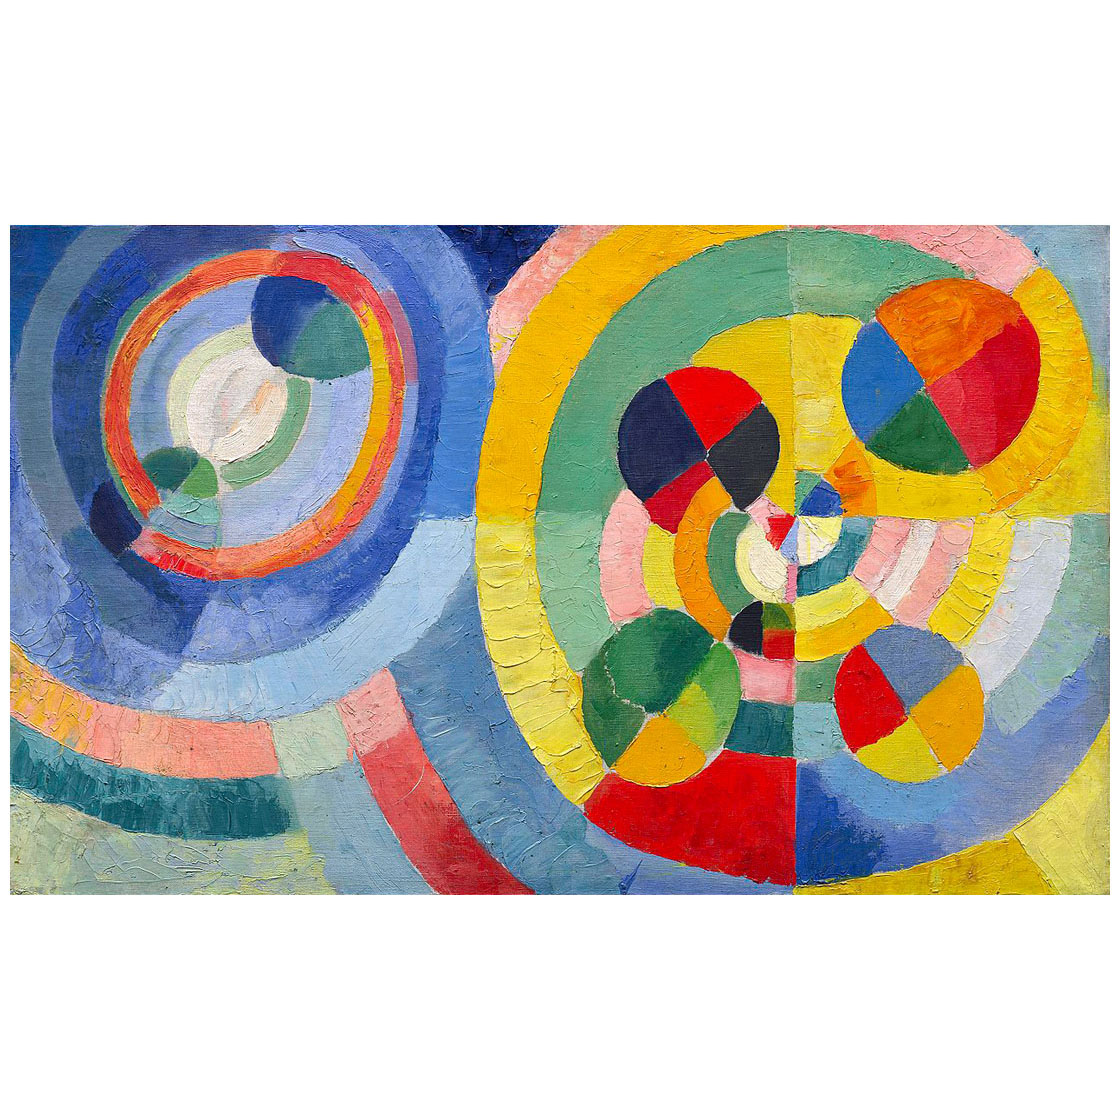 Robert Delaunay. Formes circulaires. 1930. Guggenheim Museum NY